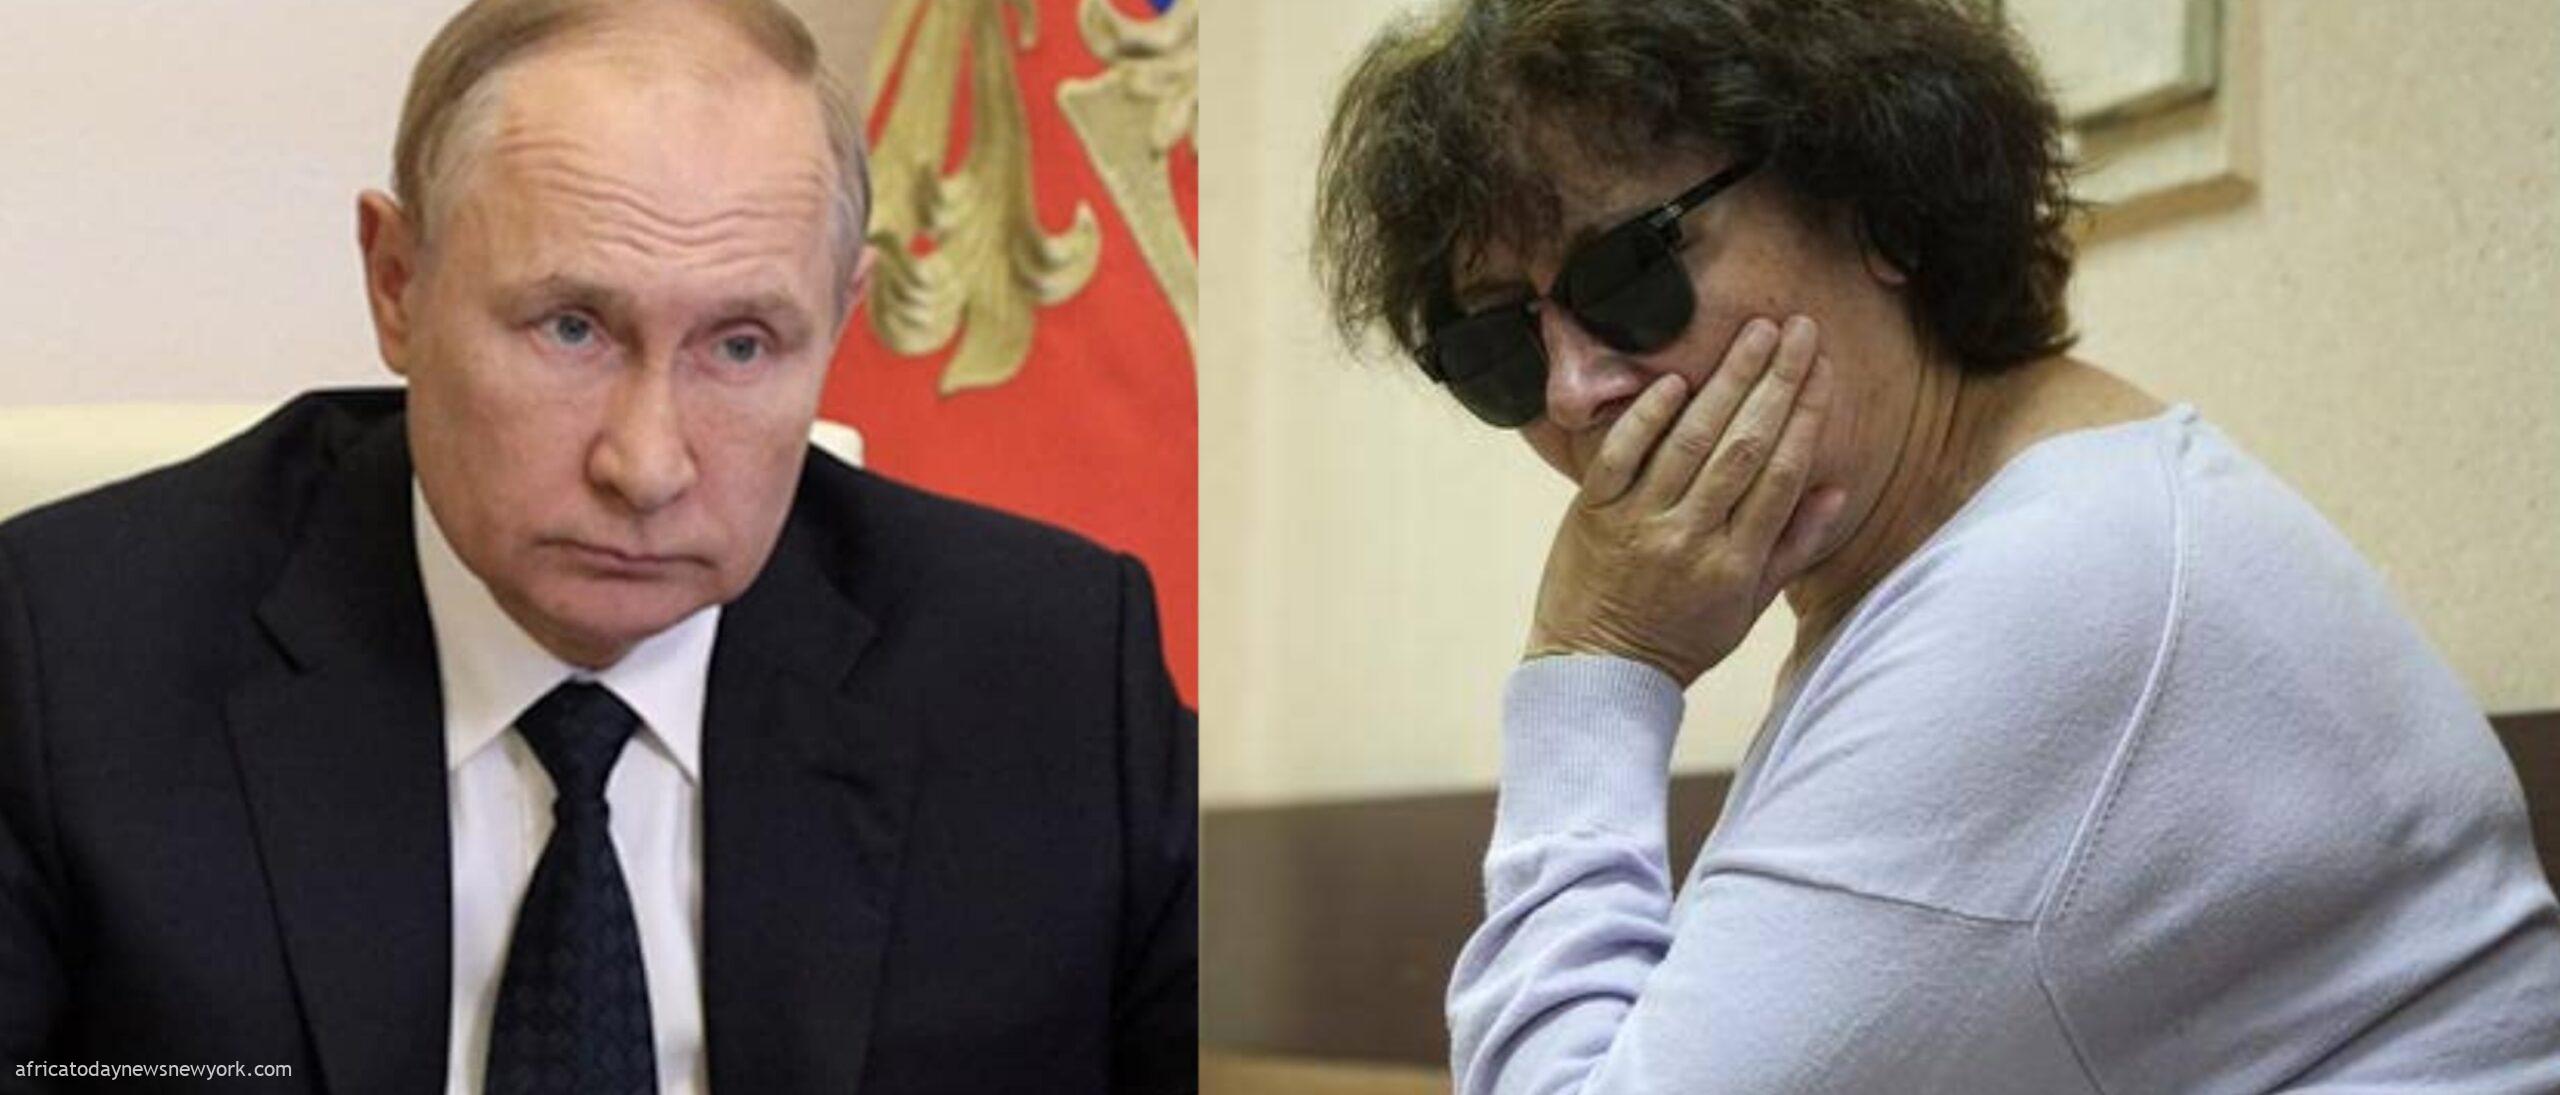 Woman Convicted For ‘Desecrating’ Putin’s Parents' Grave